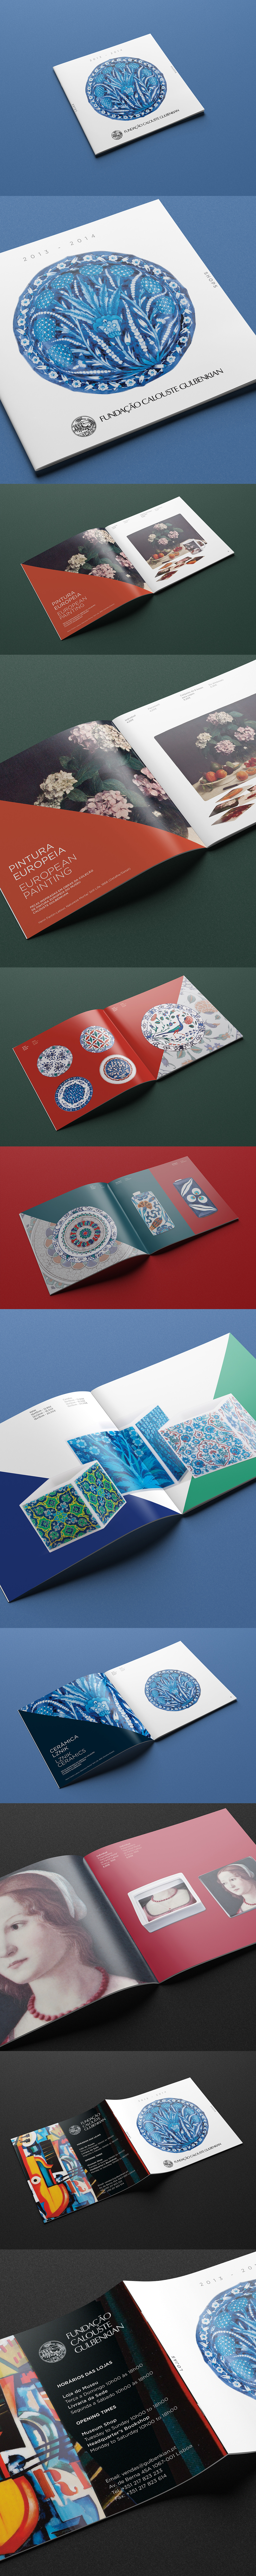 museum editorial Catalogue magazine brochure cover book design cover design book Layout